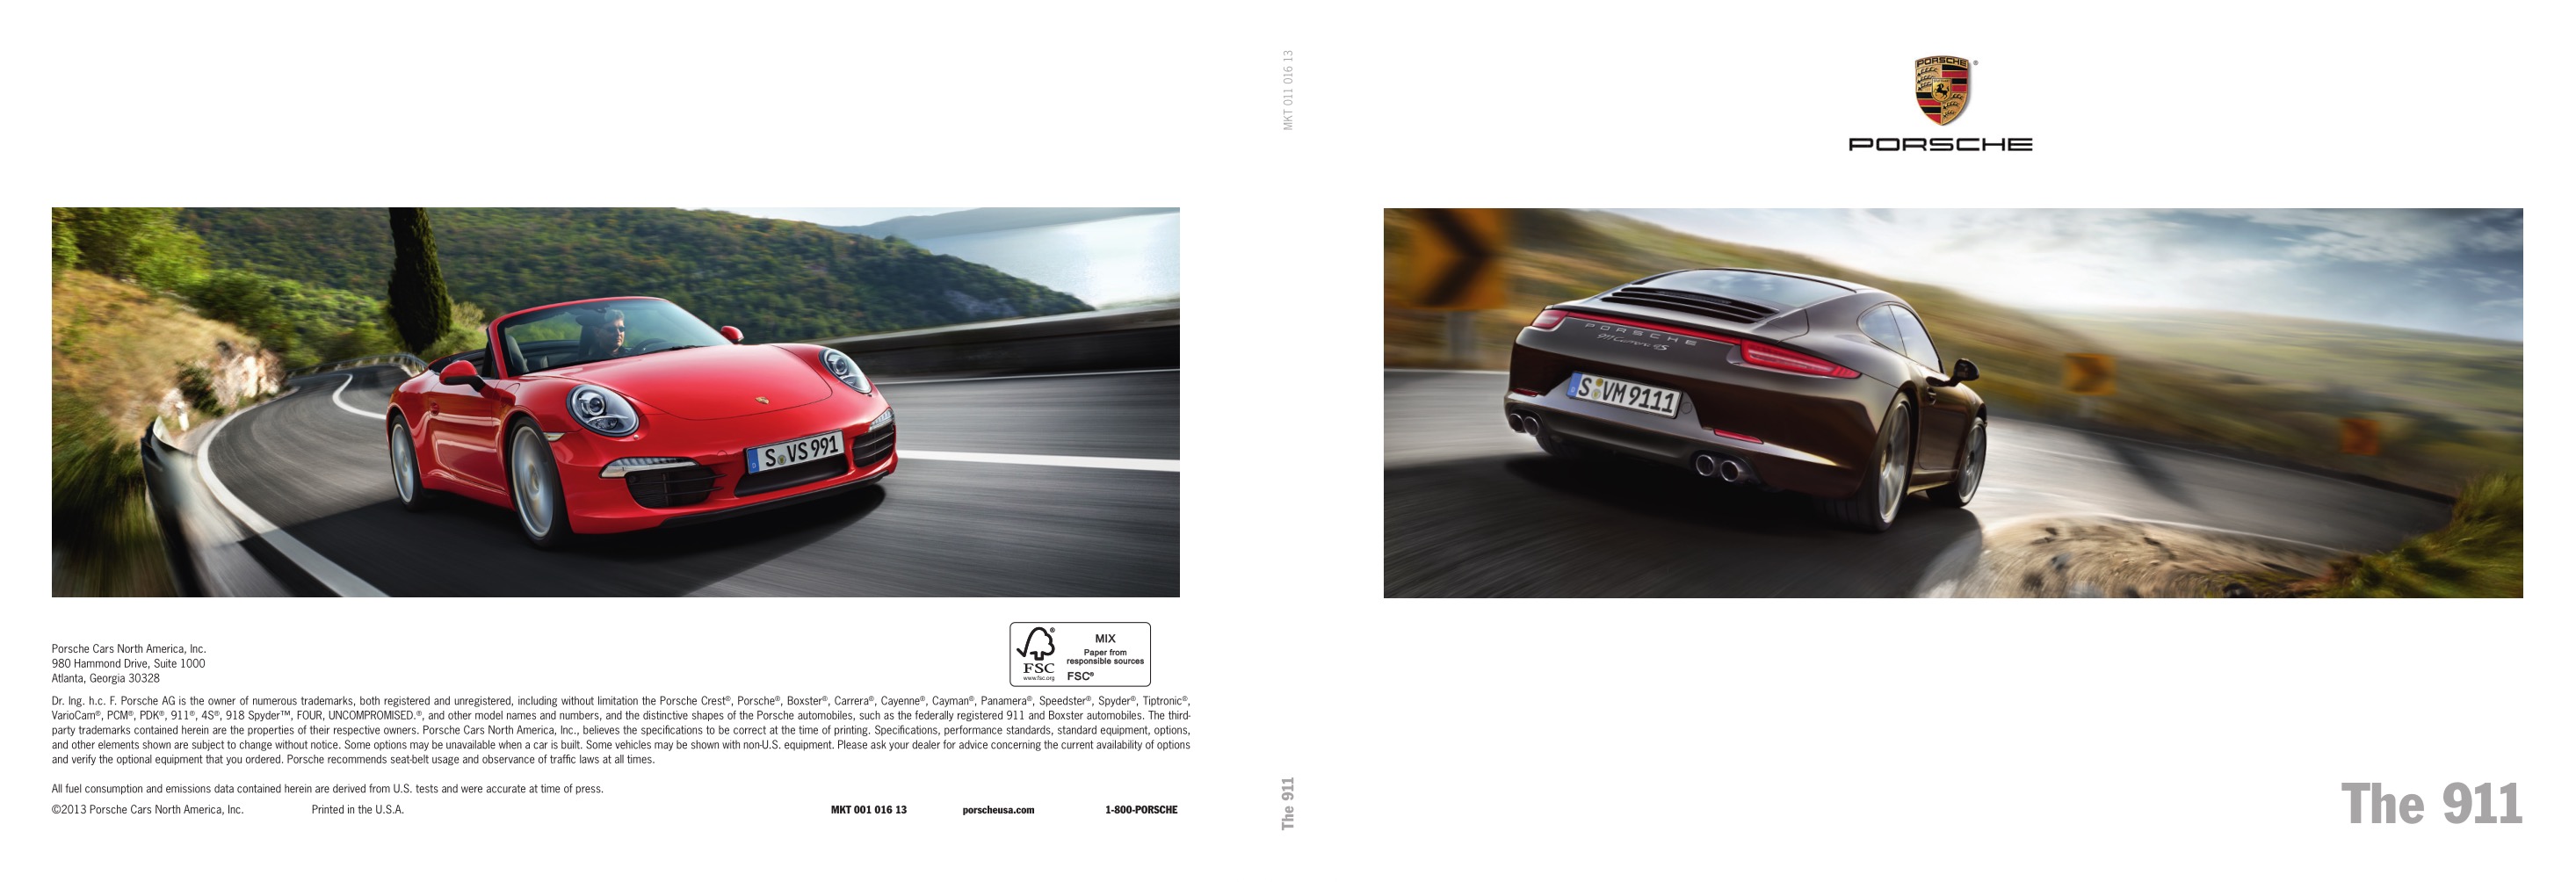 2013 Porsche 911 Brochure Page 42